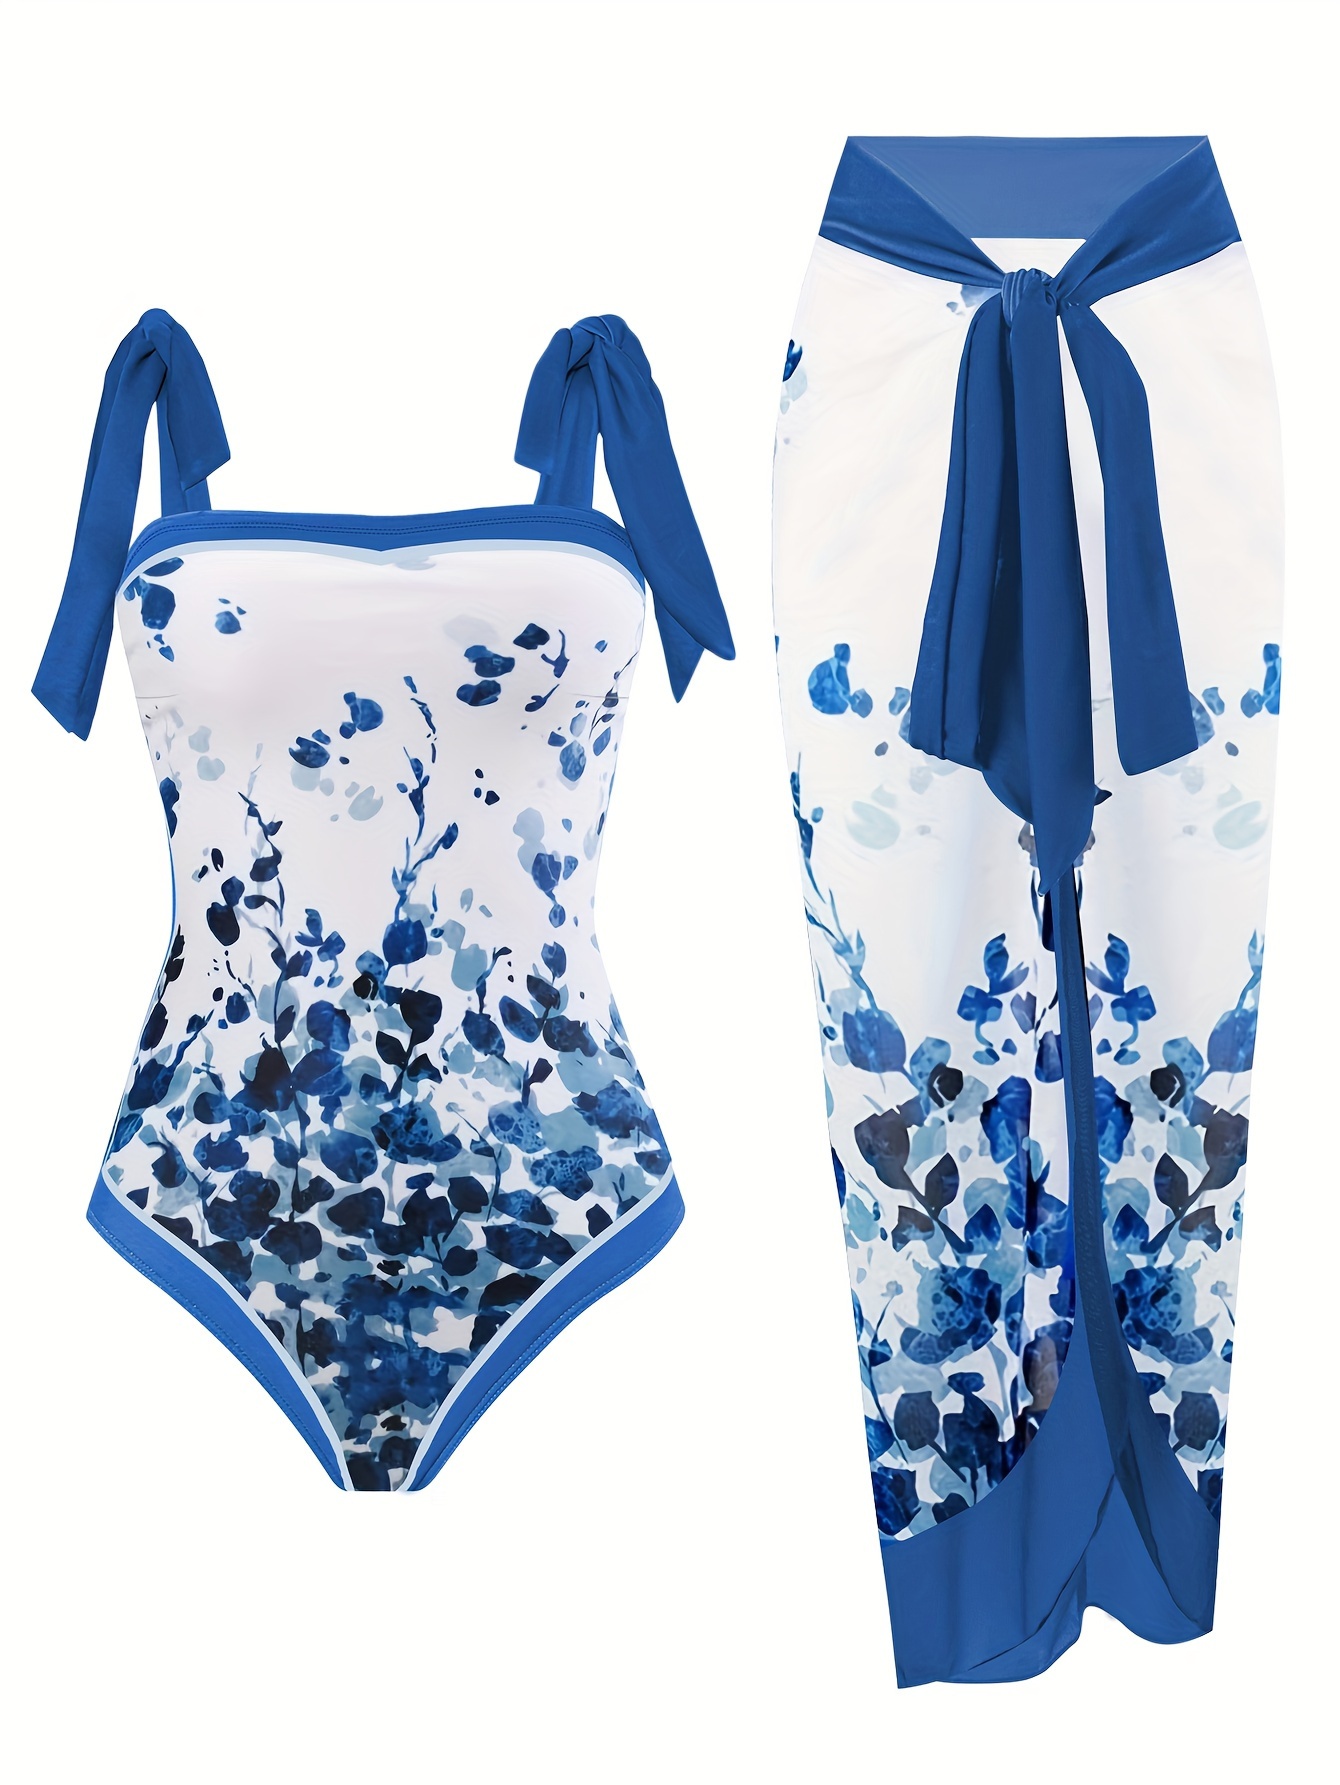 Plus Size Retro Tankini Set, Women's Plus Floral Print Tie Shoulder *  Swimsuit & Wrap Skirt Tankini Two Piece Set